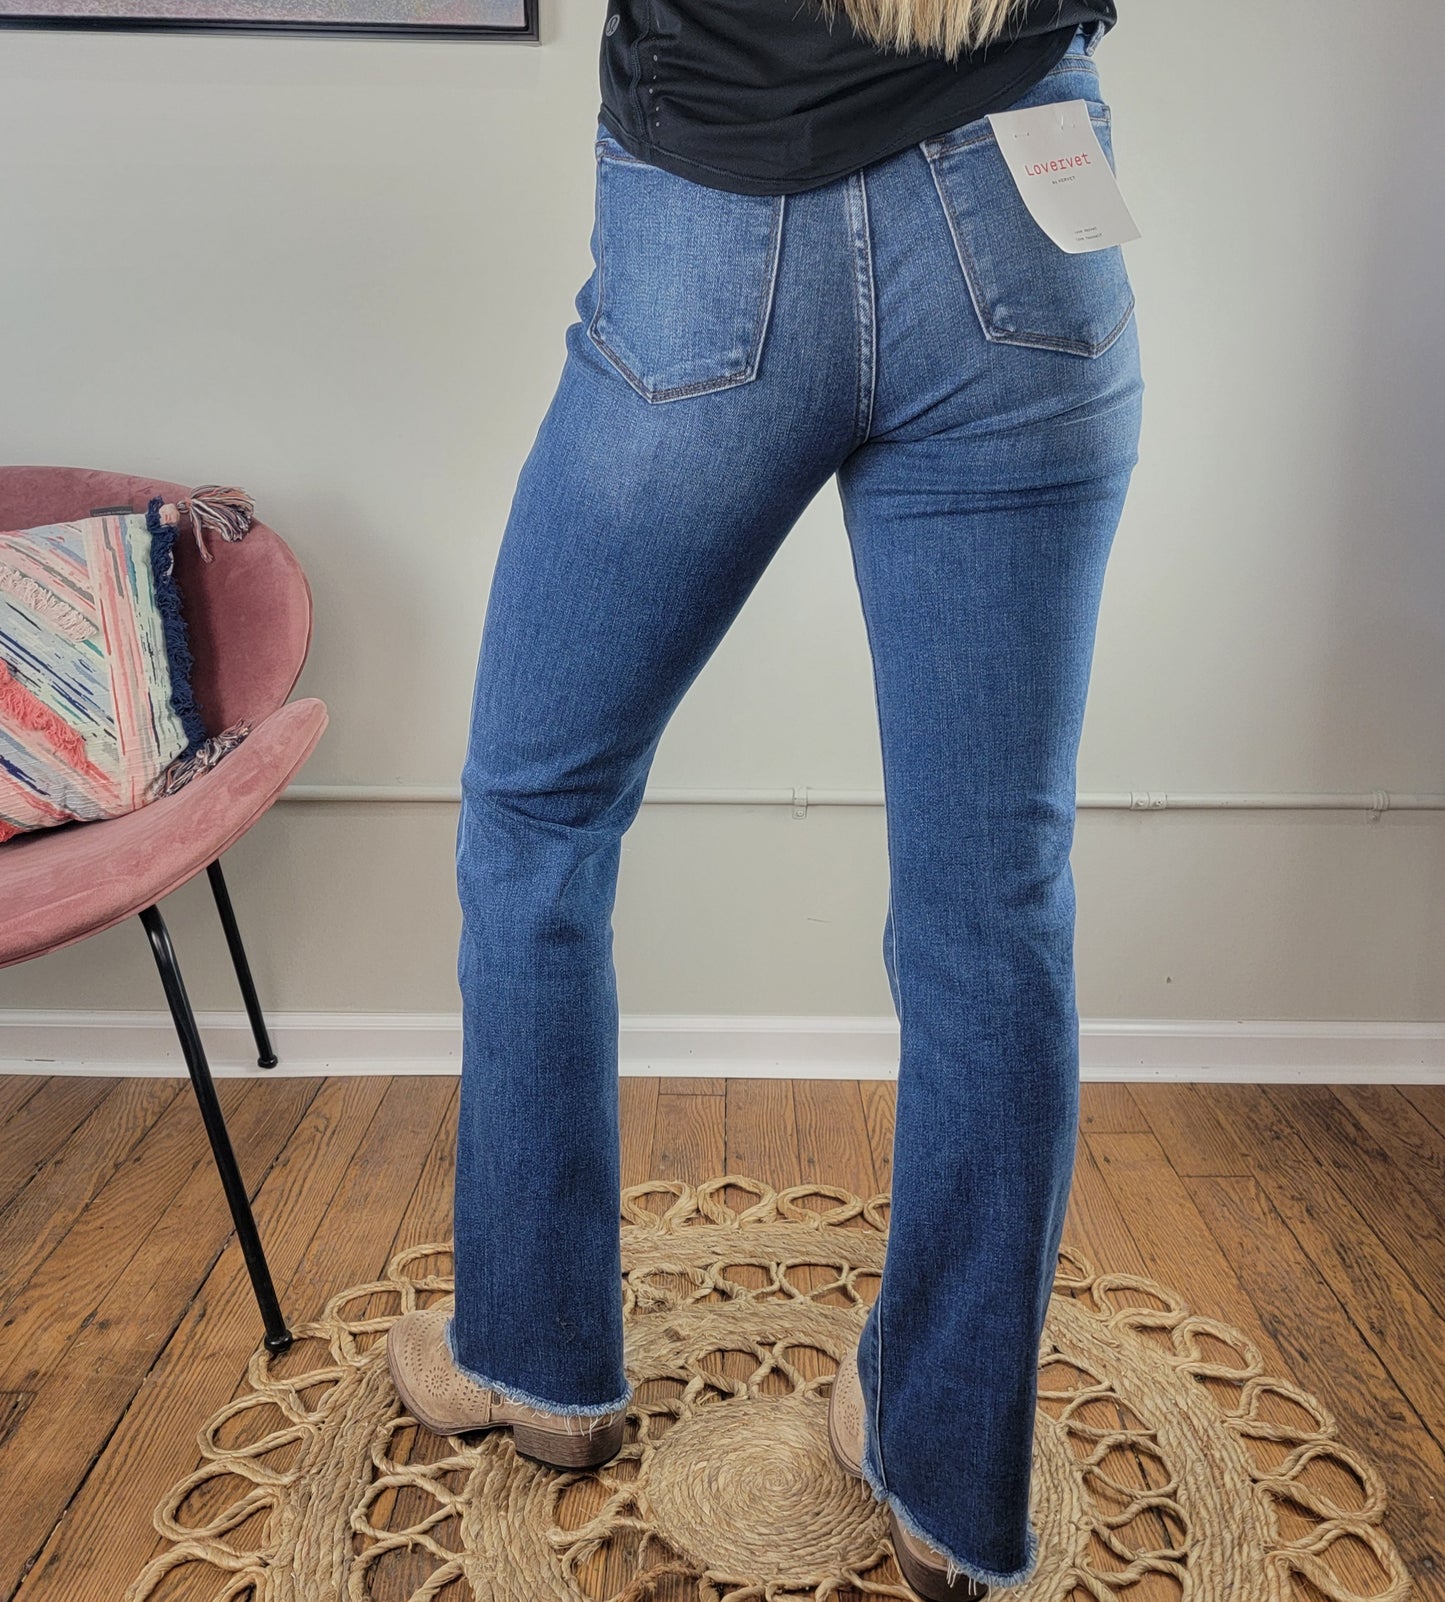 Momentous Bootcut Jeans from Lovervet